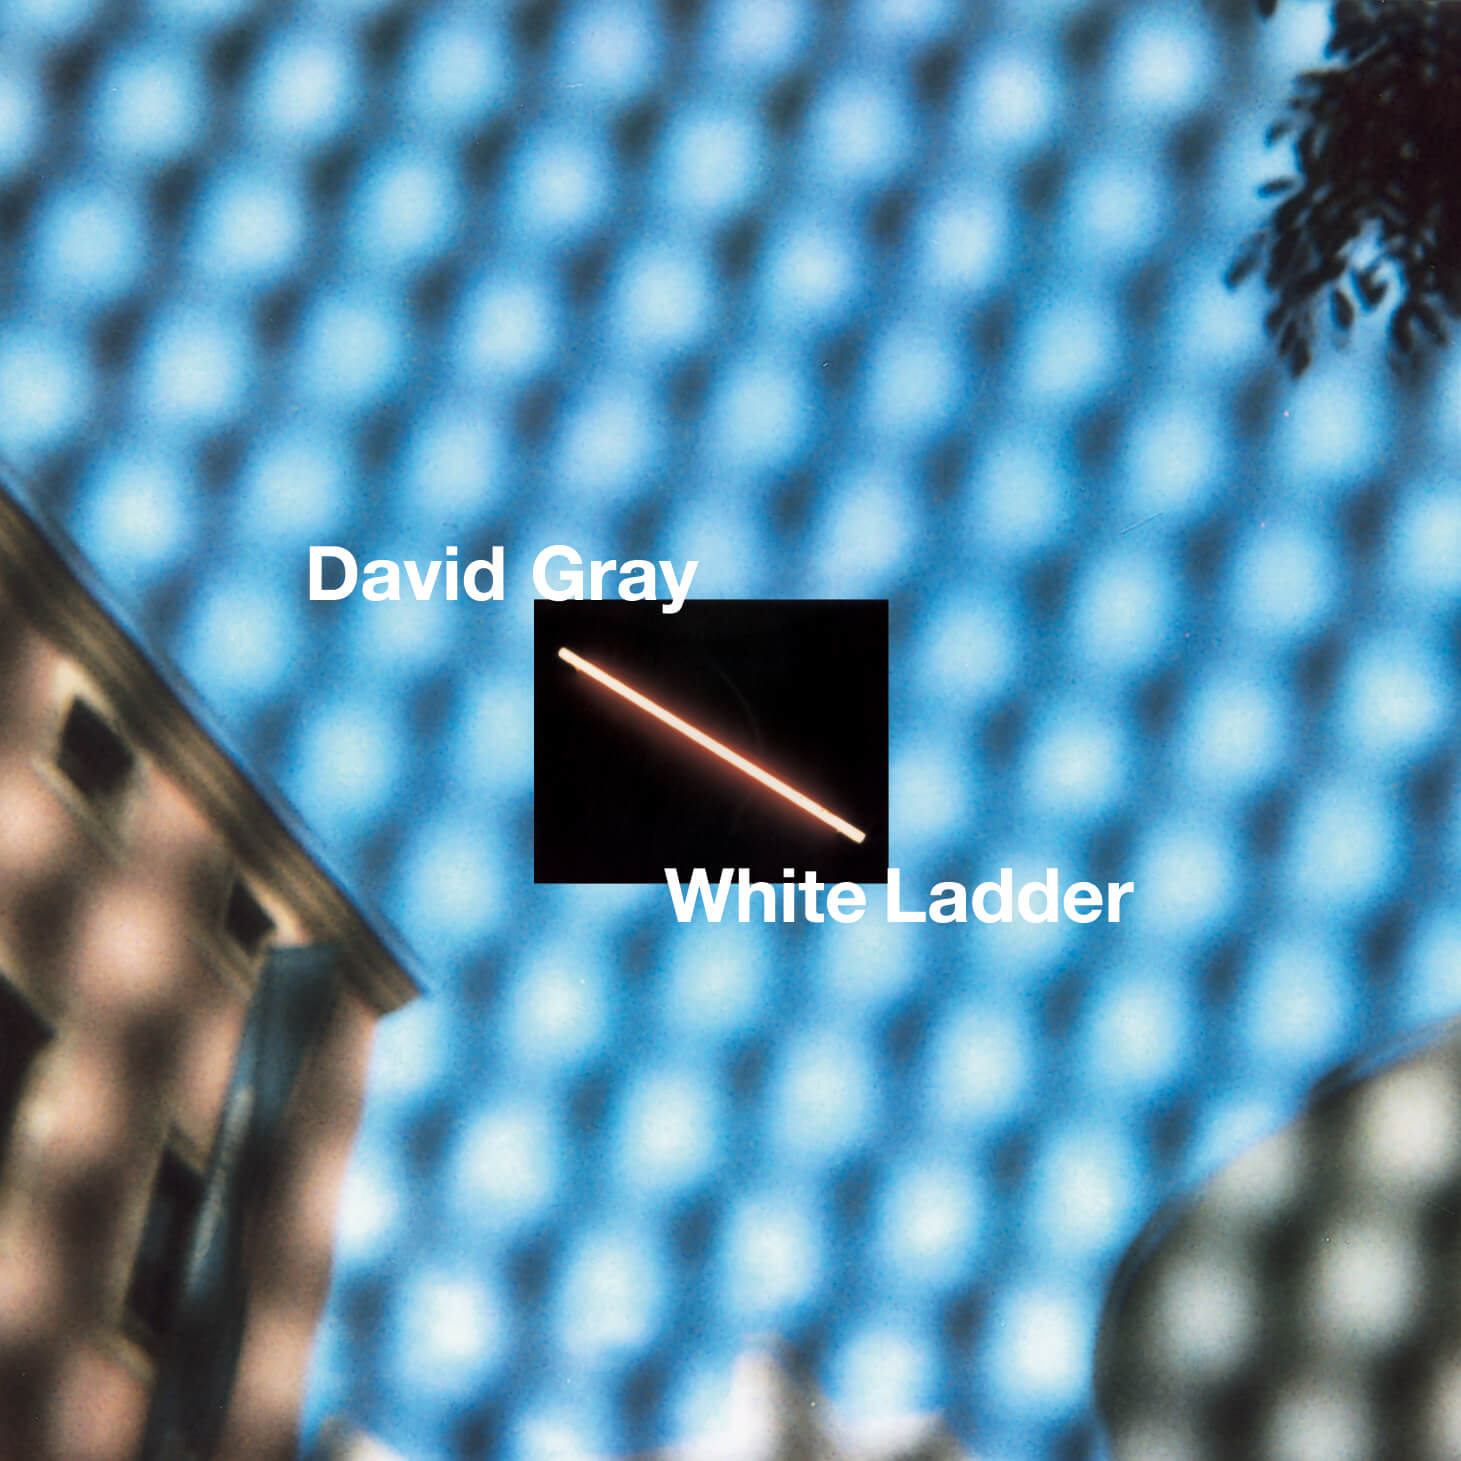 David Gray announces White Ladder 20th Anniversary